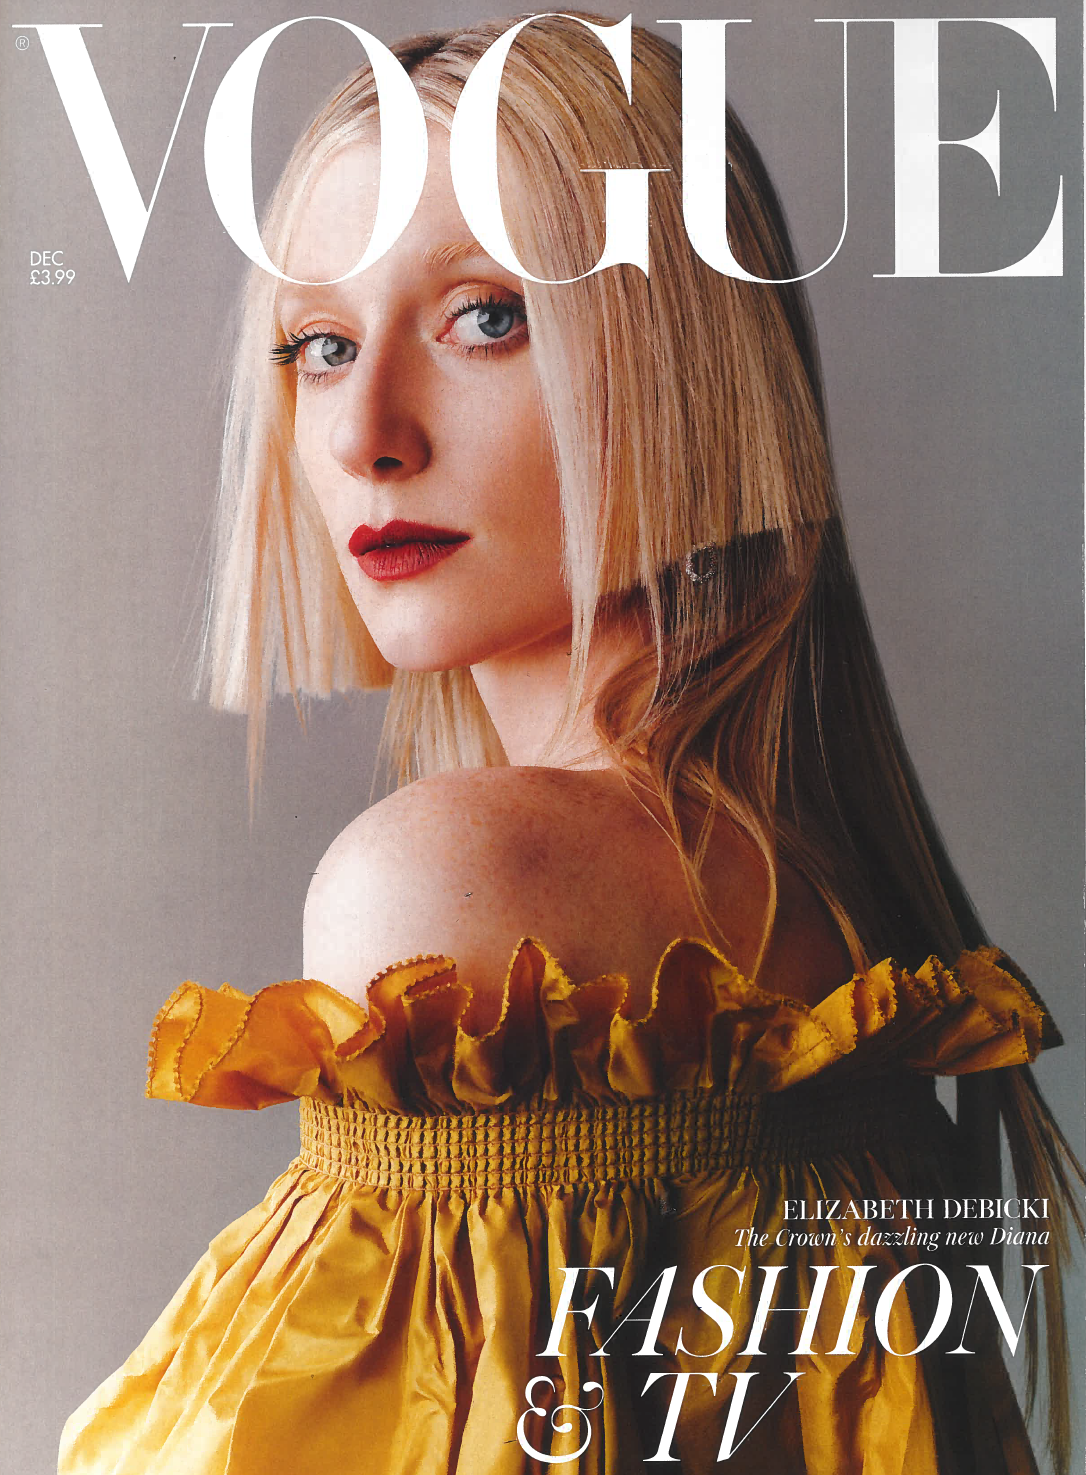 Margot Fox Jewellery Featured In British Vogue Magazine With Demeter's Romance Kyanite Earrings